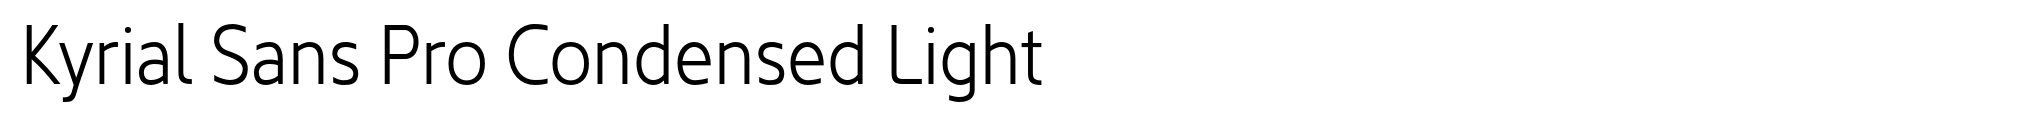 Kyrial Sans Pro Condensed Light image